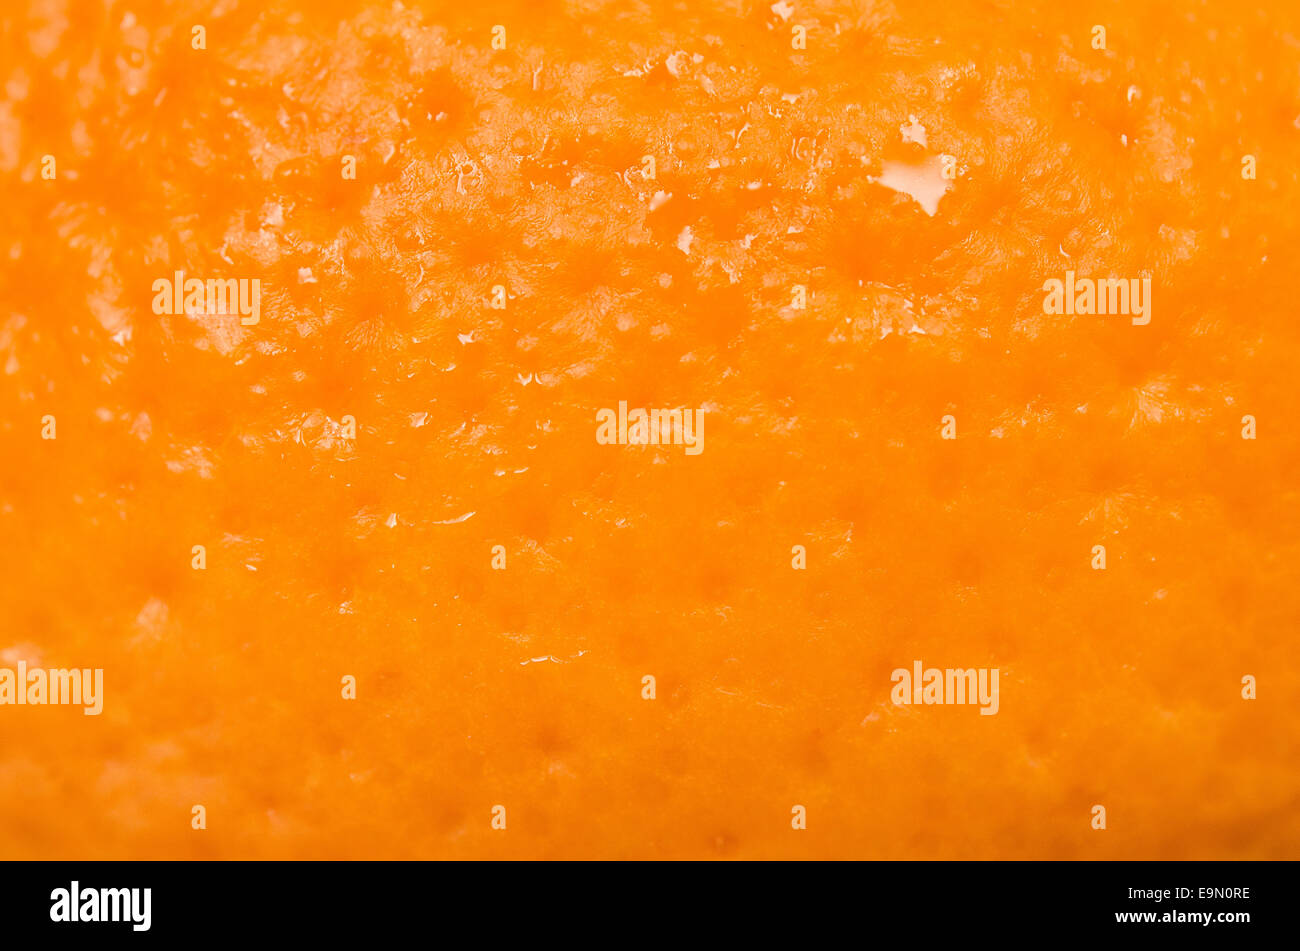 Orange peel skin hi-res stock photography and images - Alamy